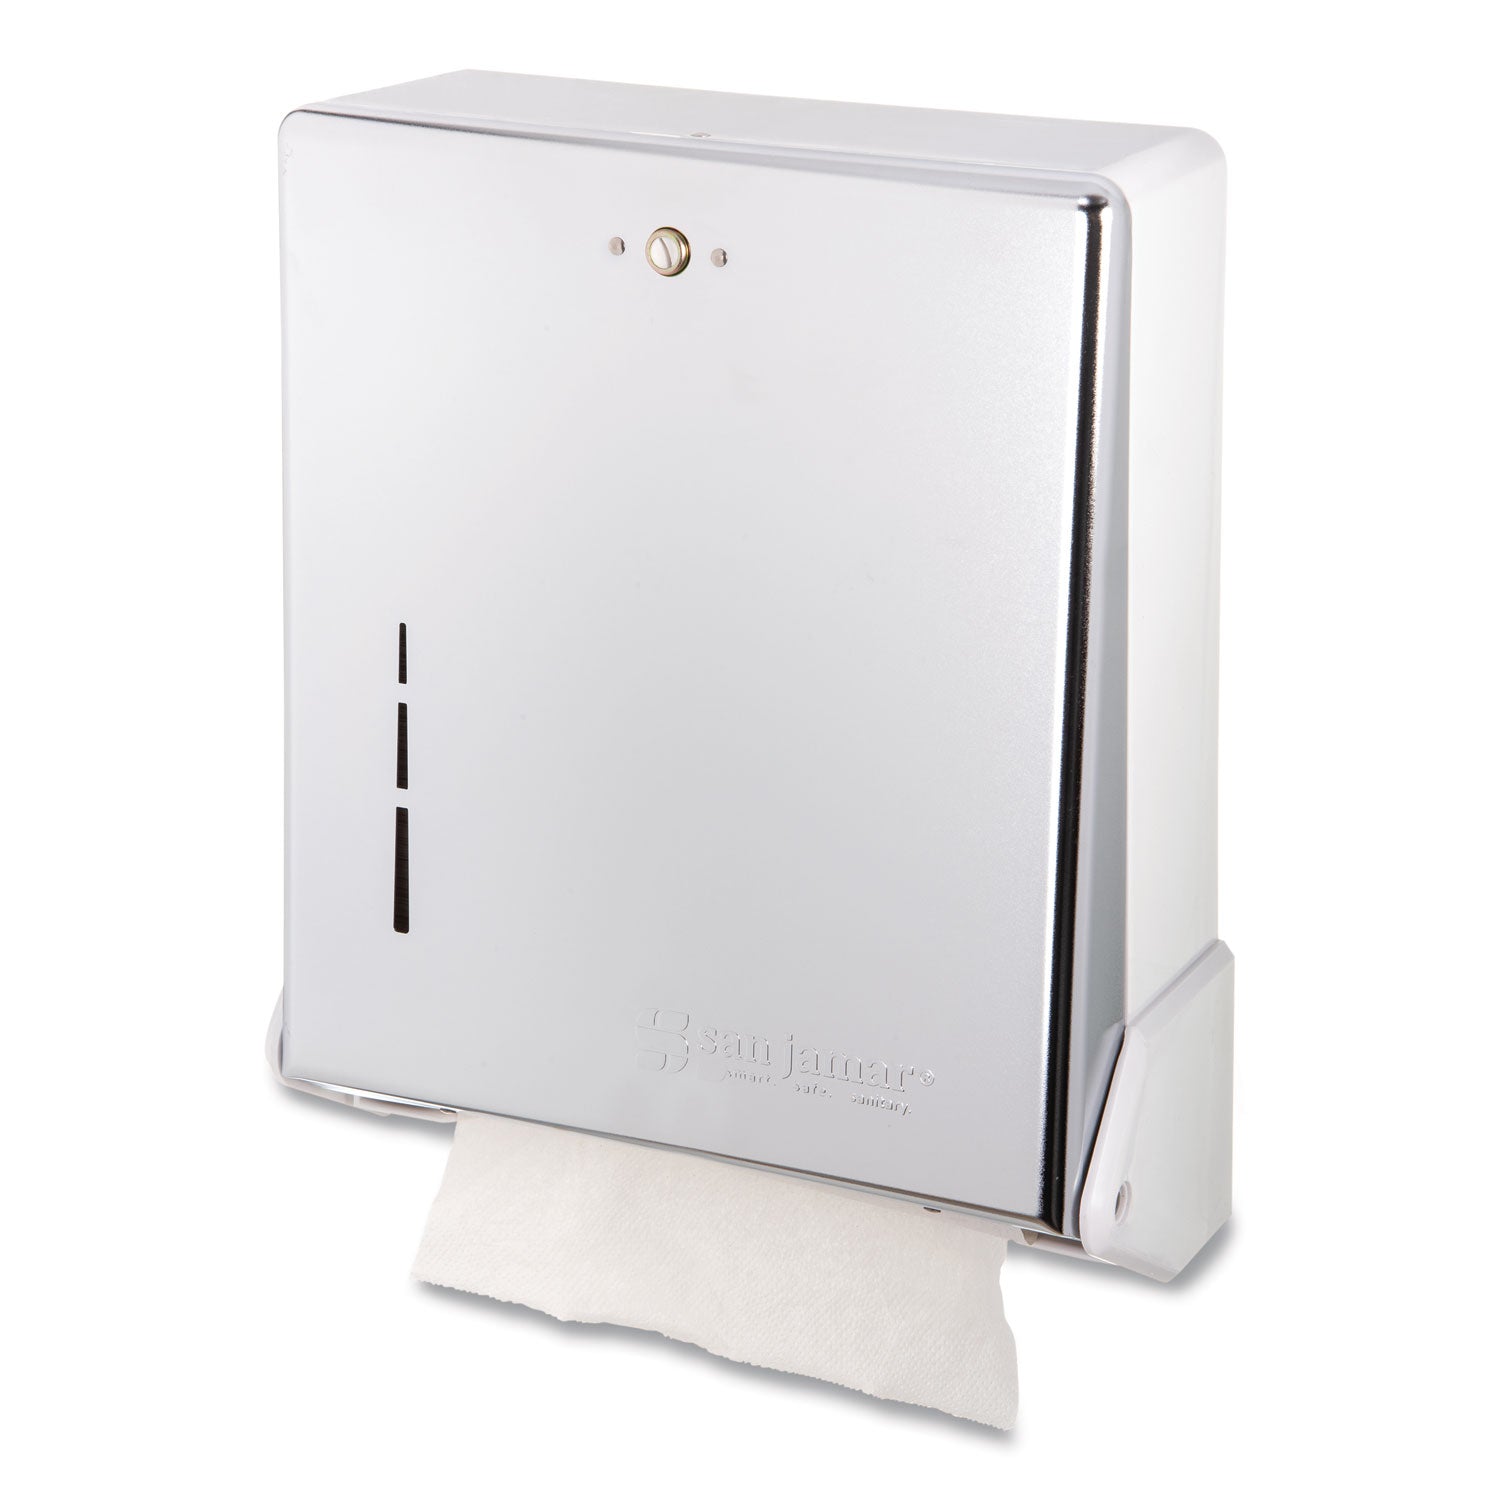 True Fold C-Fold/Multifold Paper Towel Dispenser, 11.63 x 5 x 14.5, Chrome - 